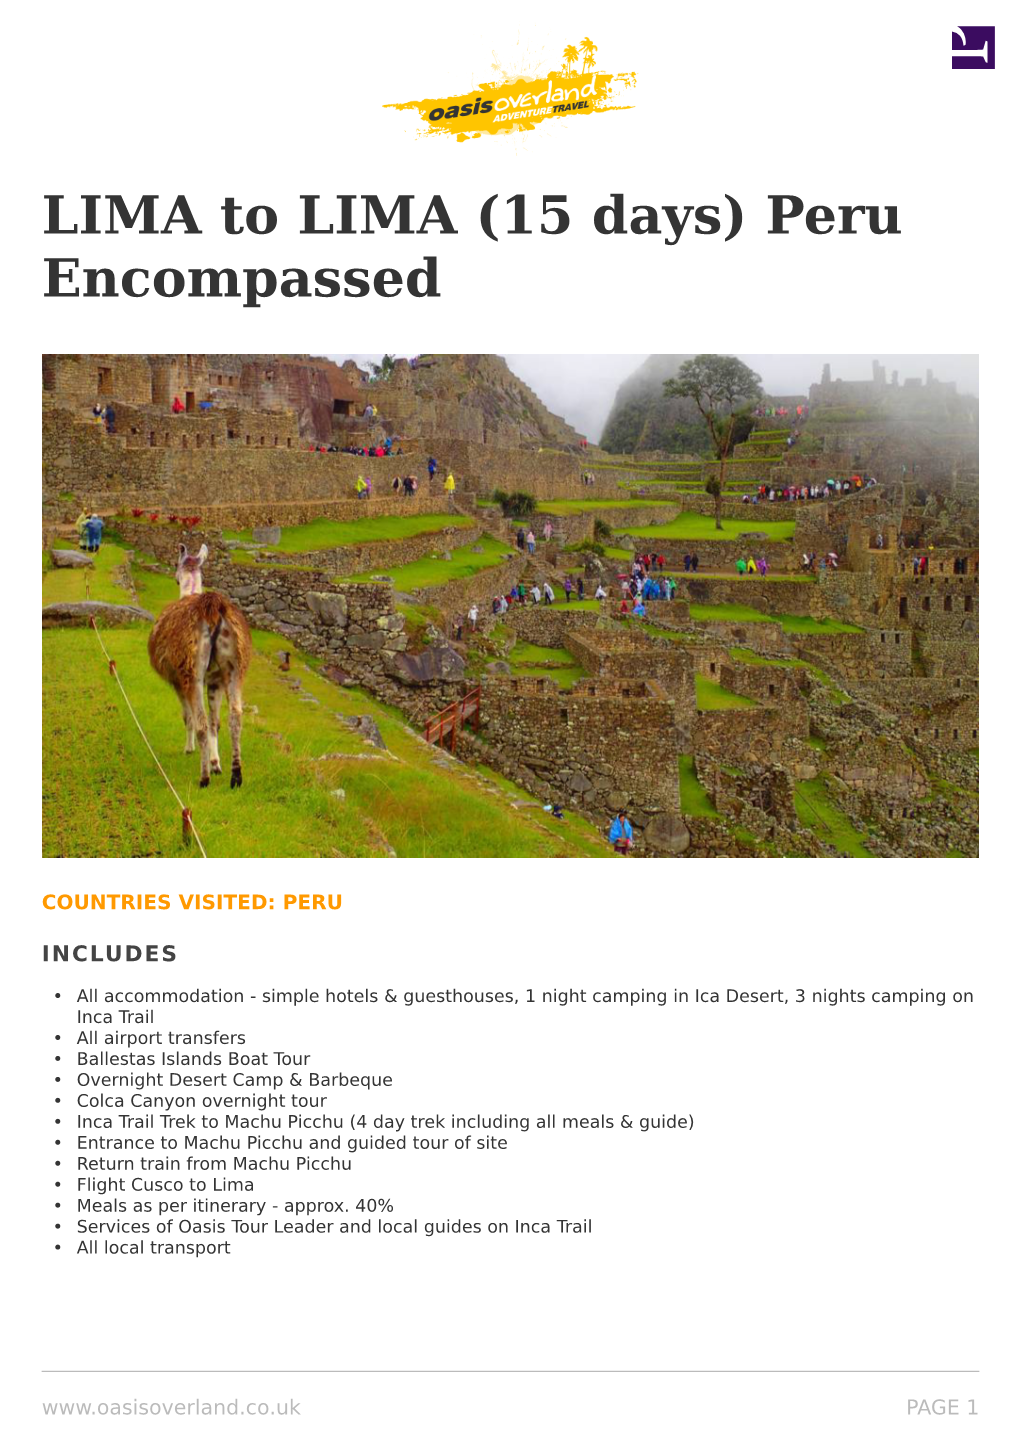 LIMA to LIMA (15 Days) Peru Encompassed